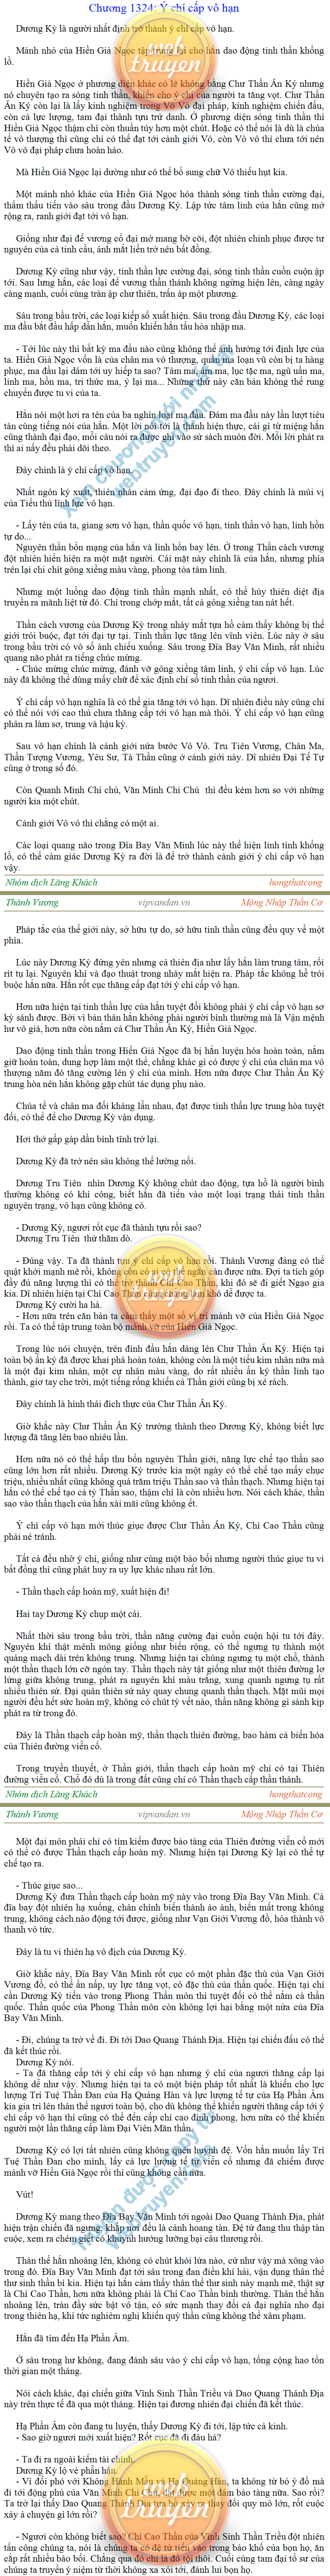 Thanh-vuong-1324.png